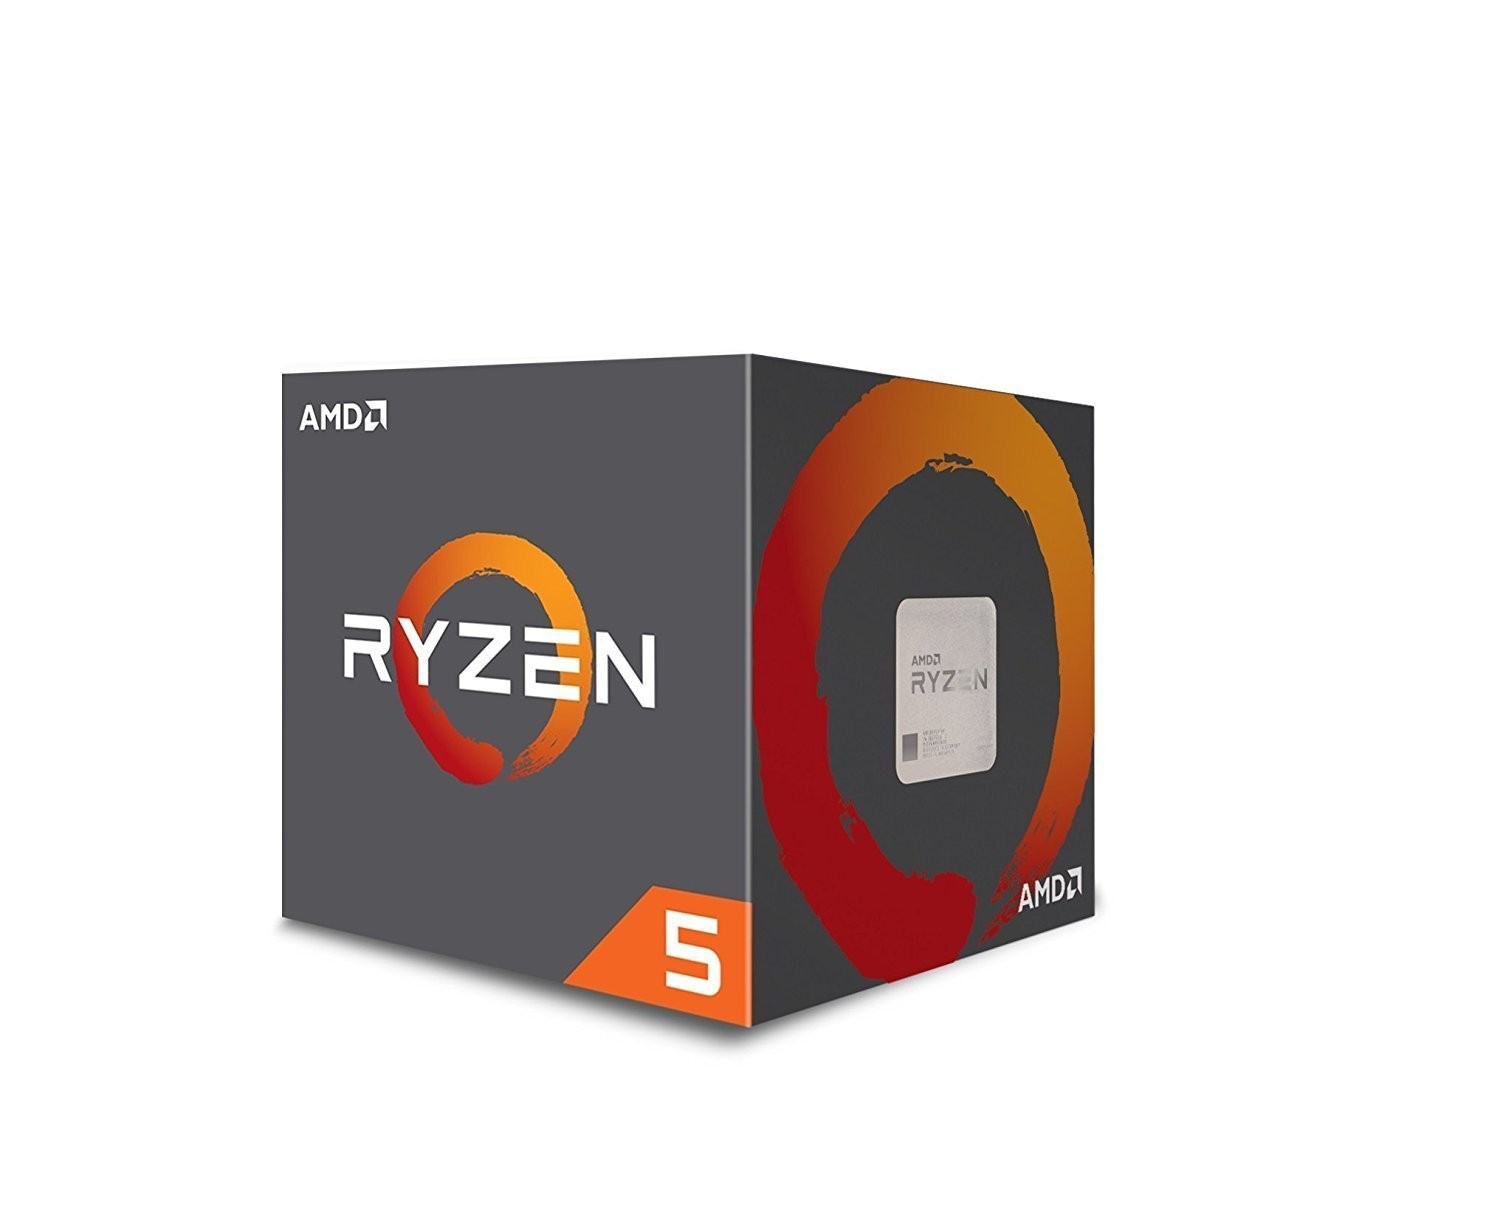 AMD Ryzen 5 1500X Desktop Processor